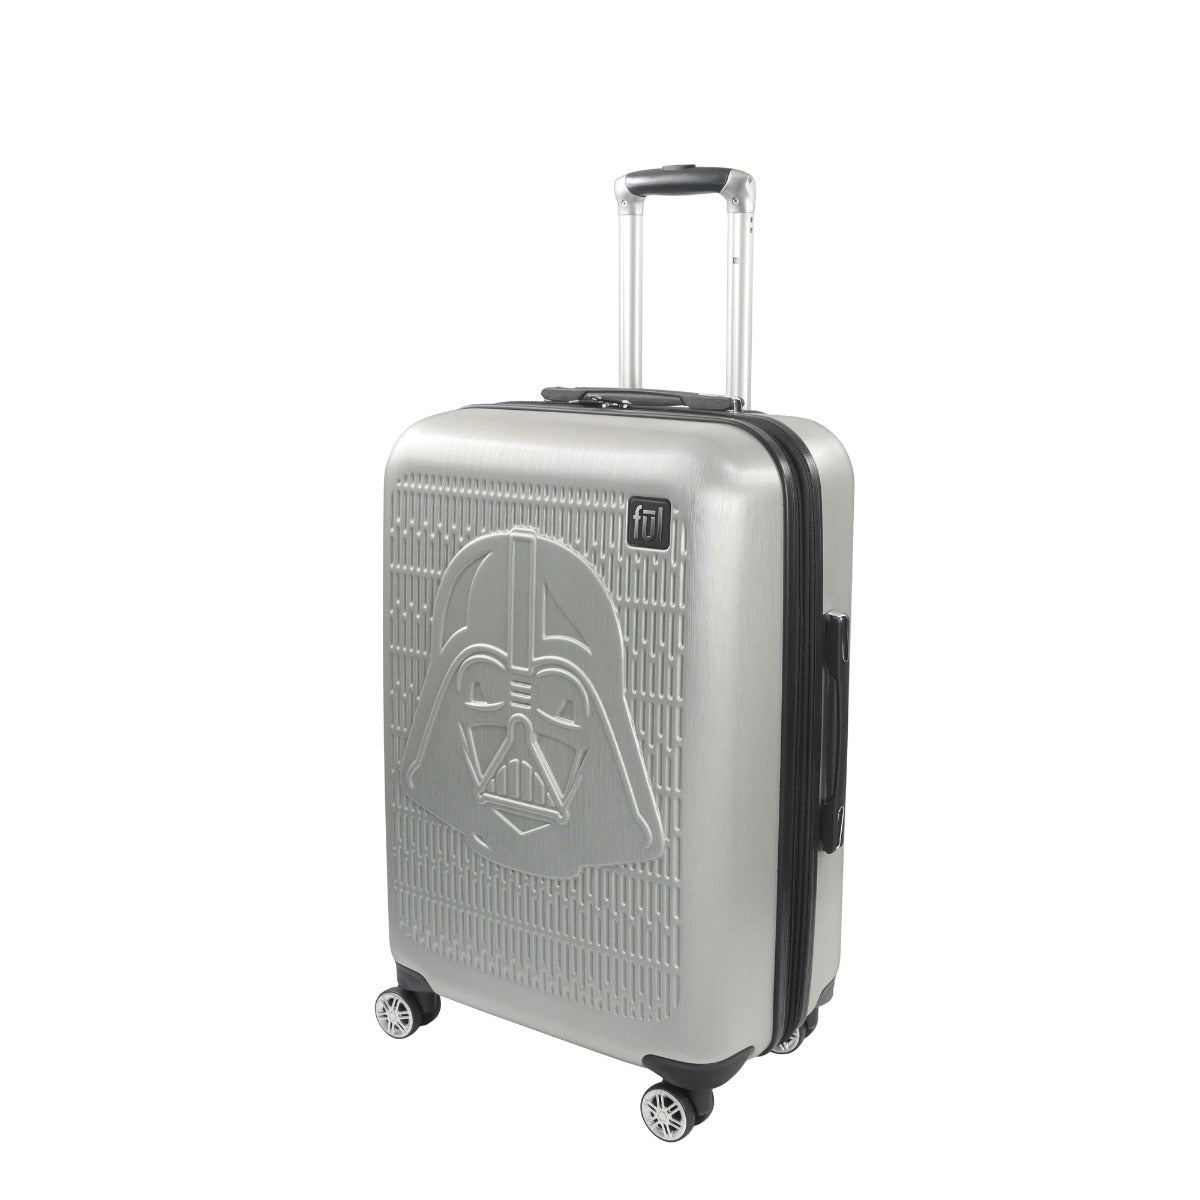 Star Wars Darth Vader Spinner Suitcase 25-inch luggage silver